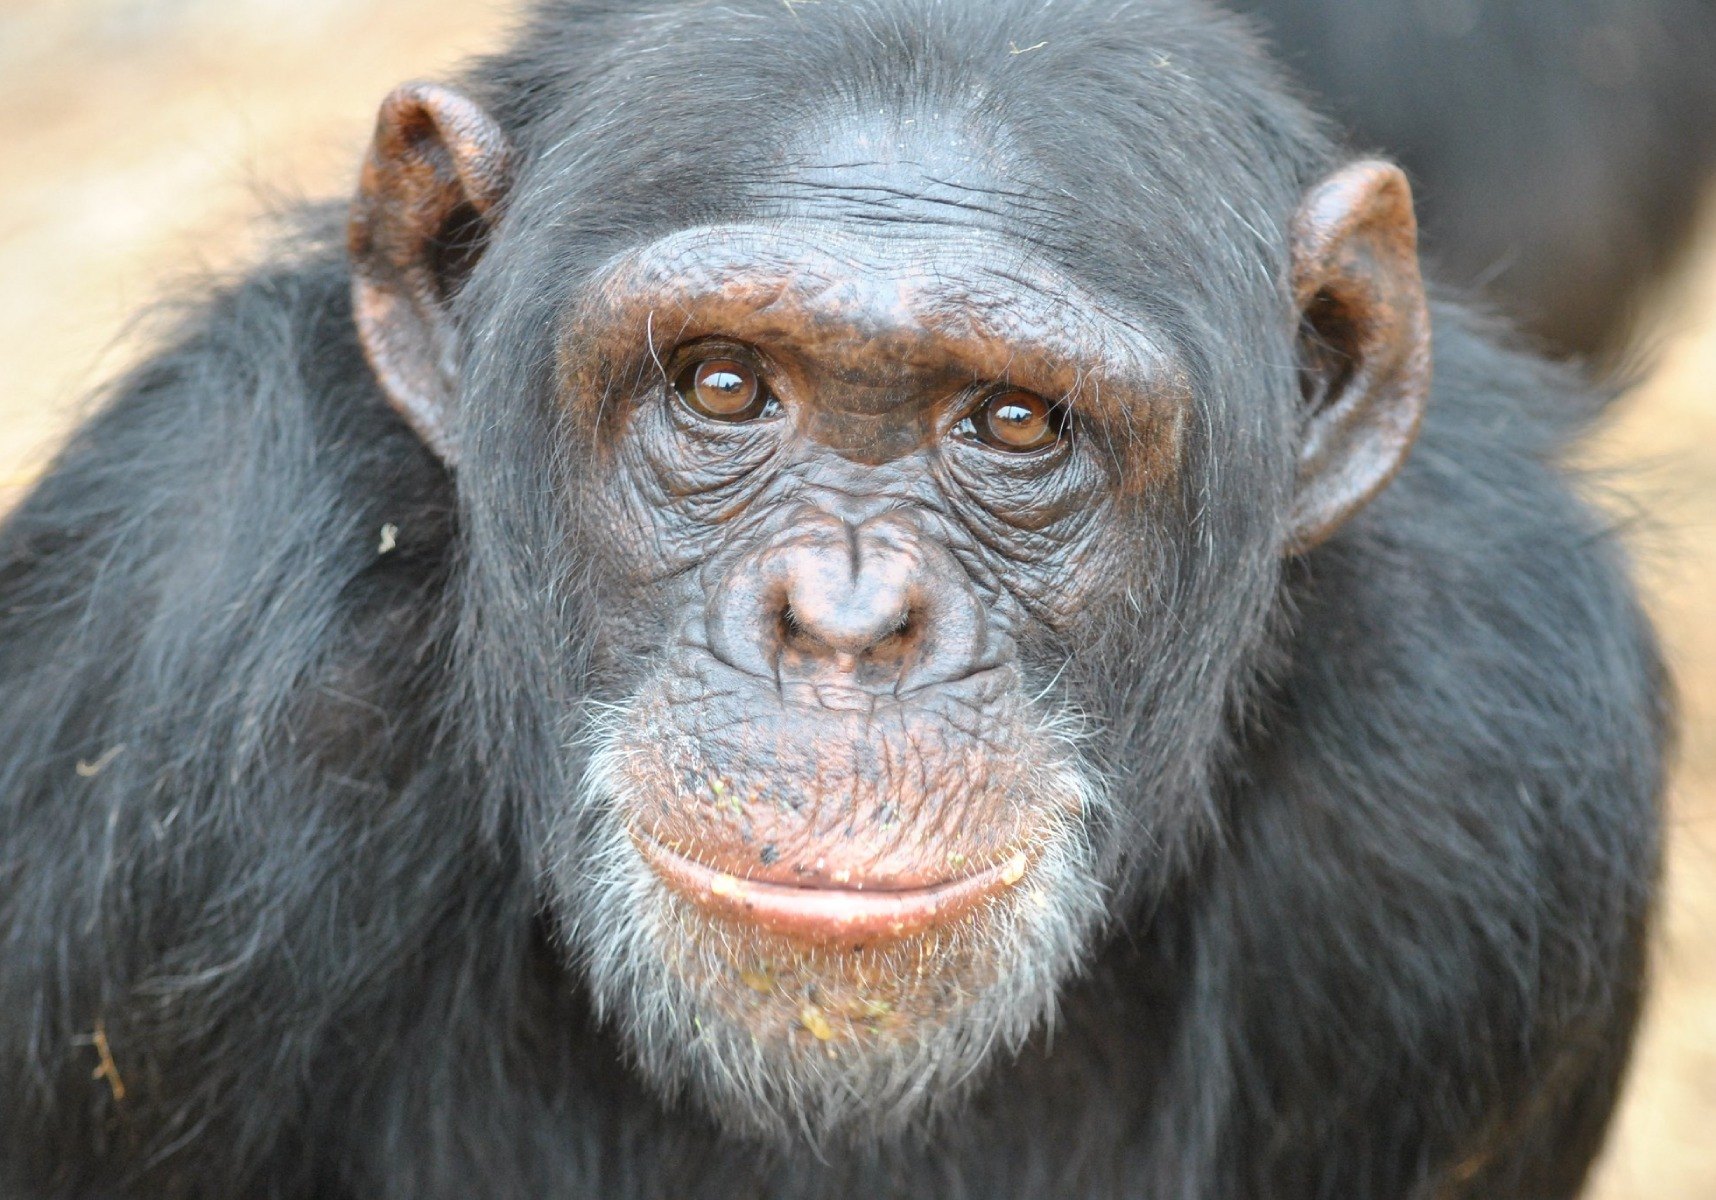 Chimpanzee looking directly at camera